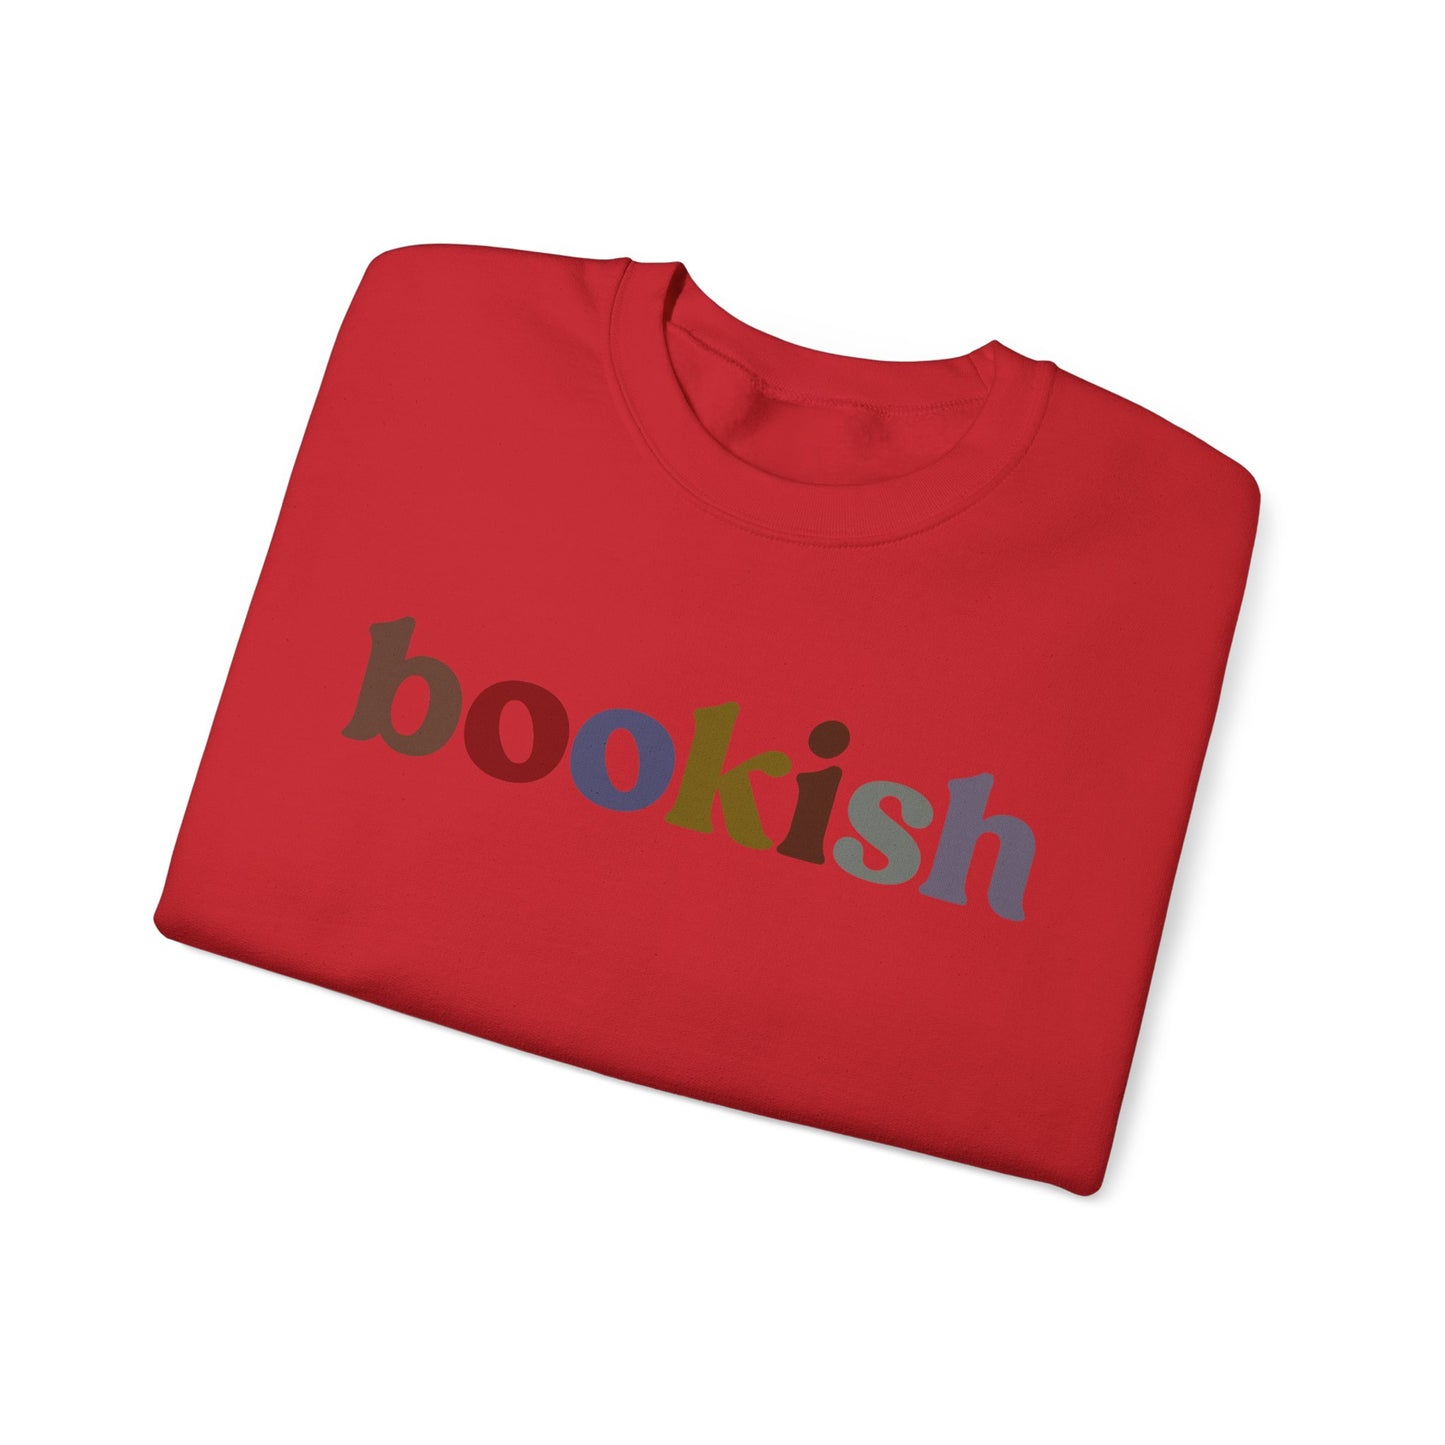 Bookish Sweatshirt, Book Lovers Club Sweatshirt, Bookworm Era Sweatshirt, Book Nerd Sweatshirt, Book Club Sweatshirt, Gift for Friend, S1314